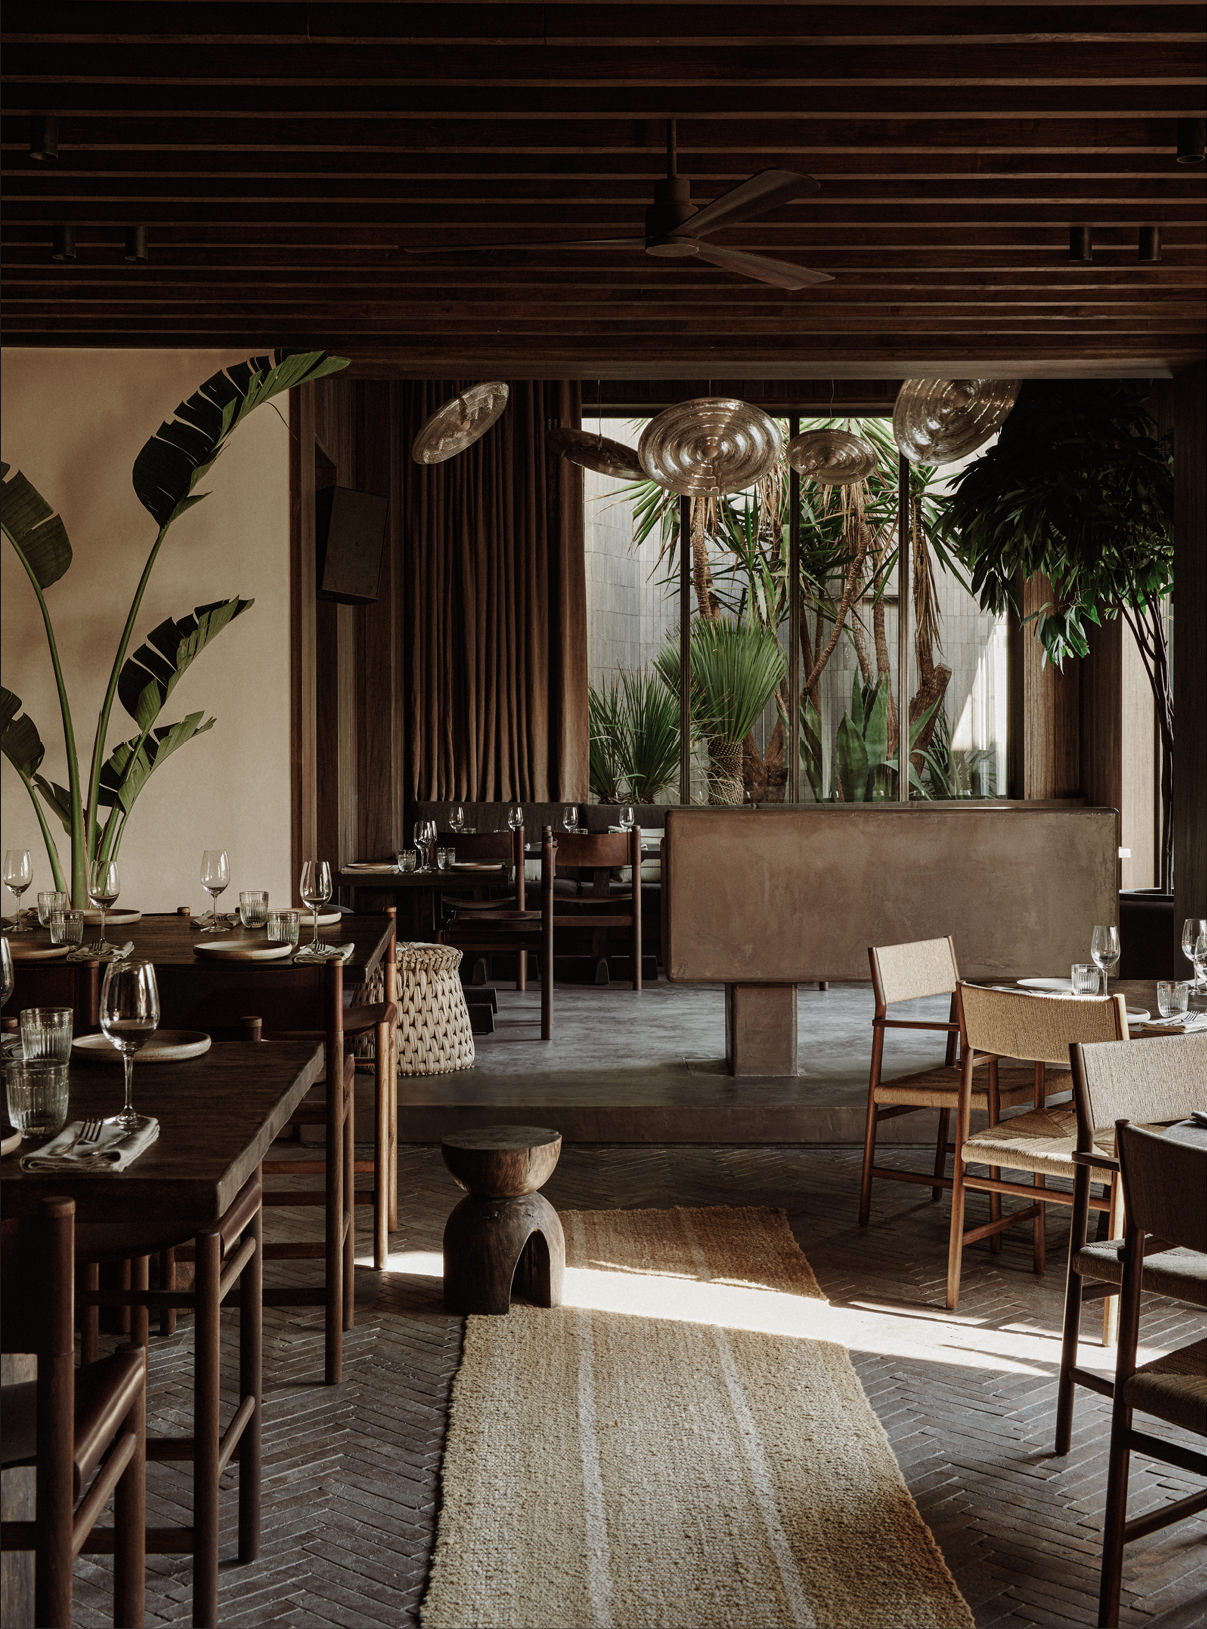 Noema Restaurant & Bar Mykonos designed by Lambs and Lions Berlin, Interior design Salon